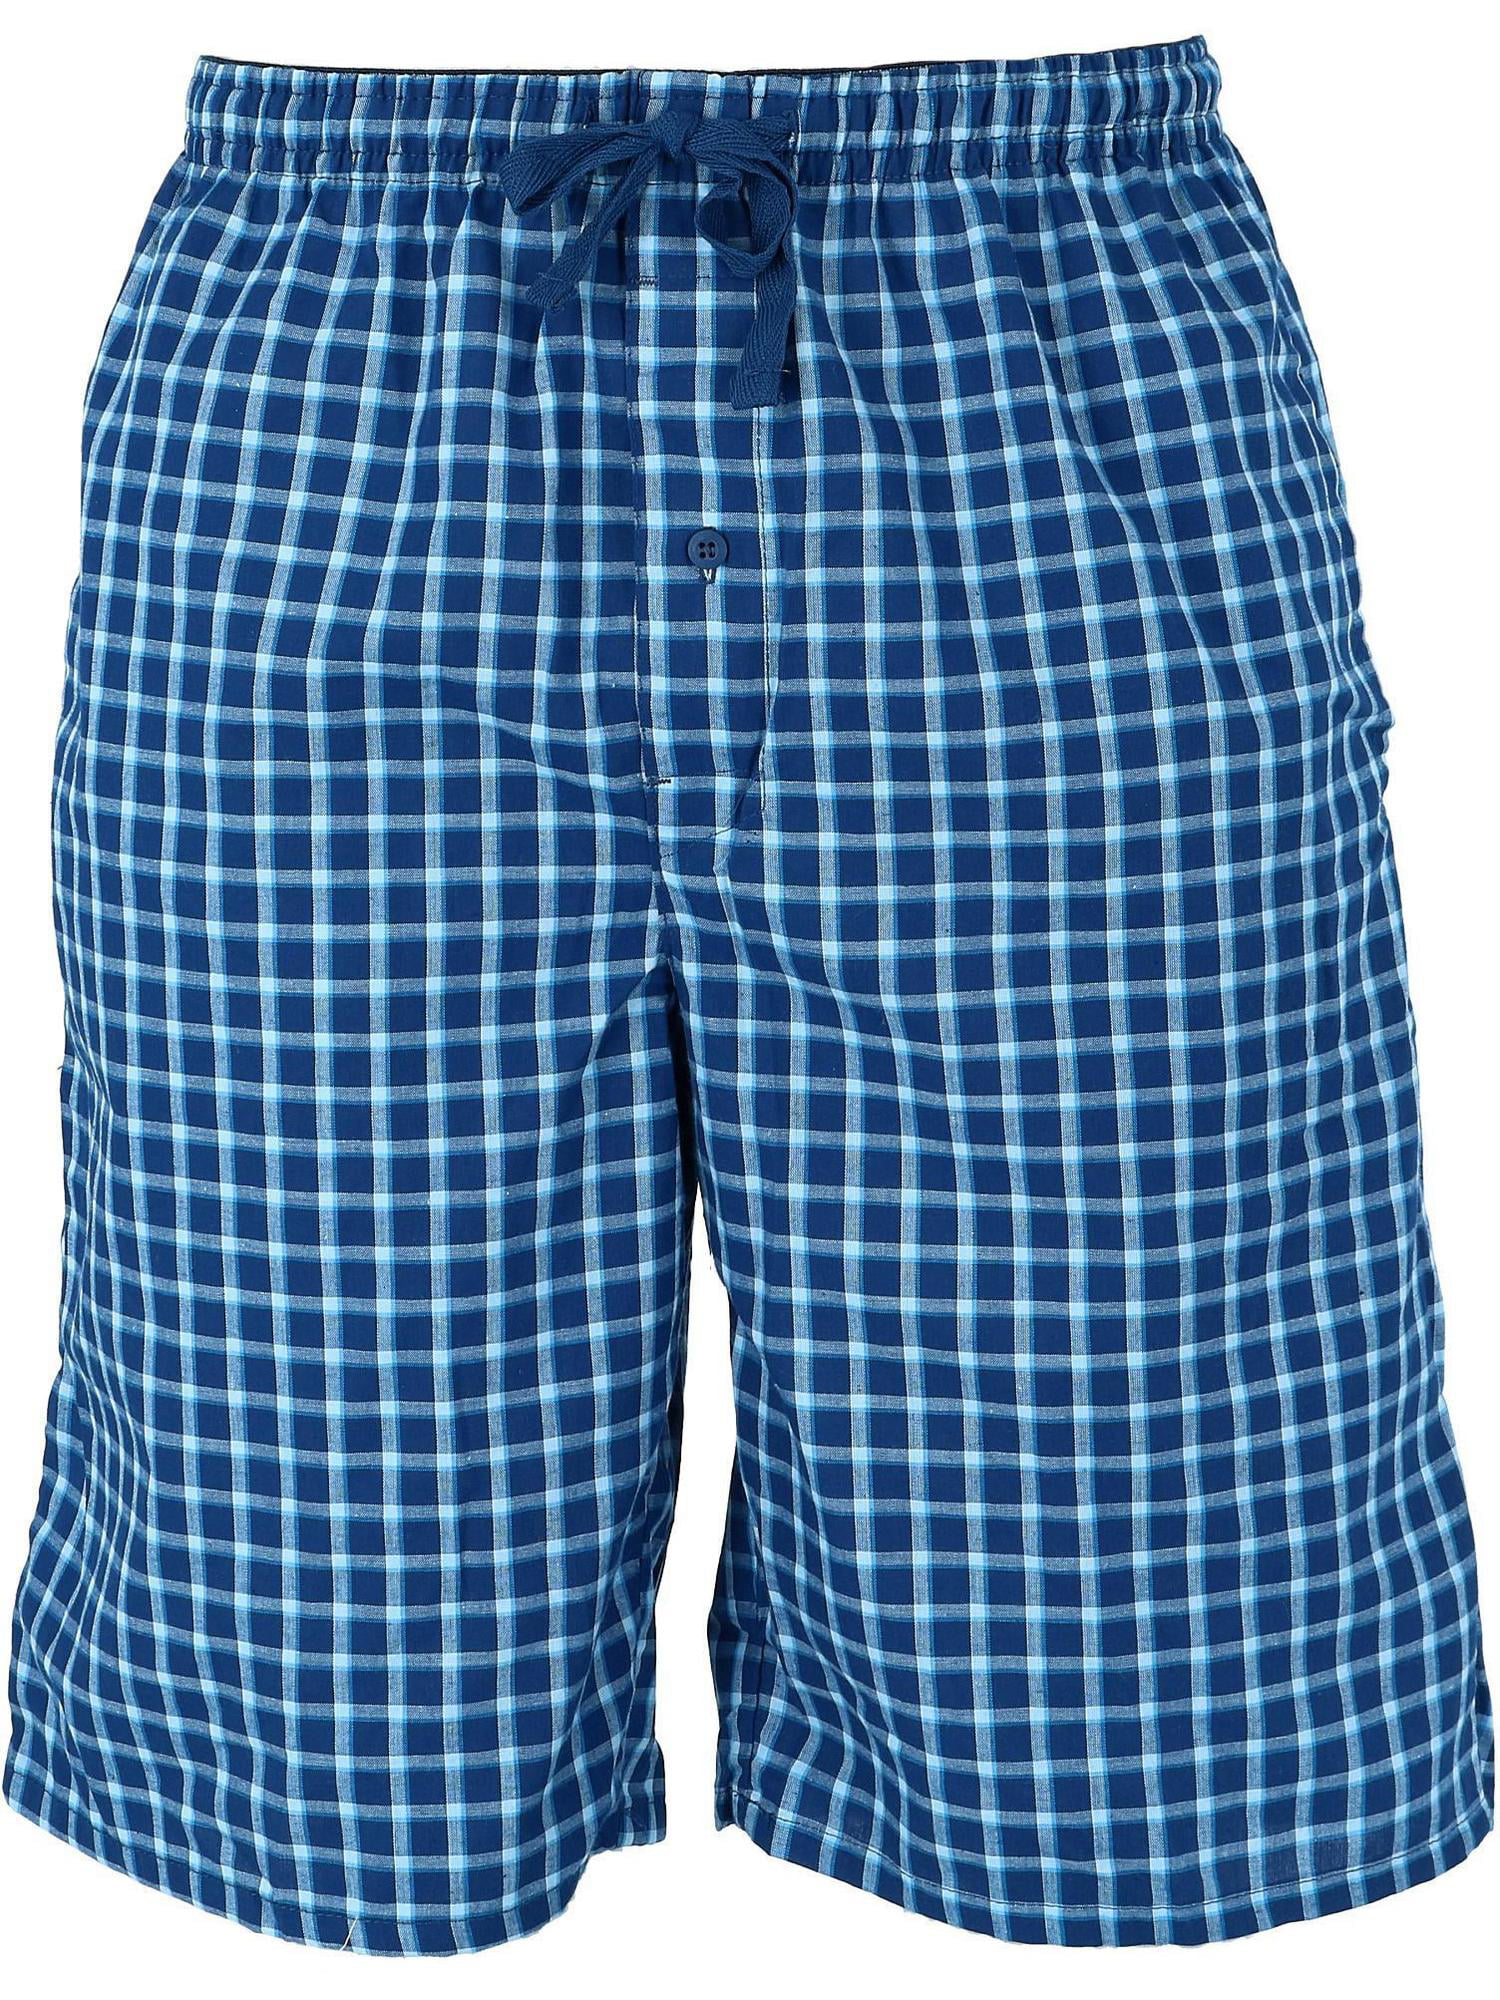 Hanes - Hanes Madras Sleep Pajama Shorts (Men's Big & Tall) - Walmart ...